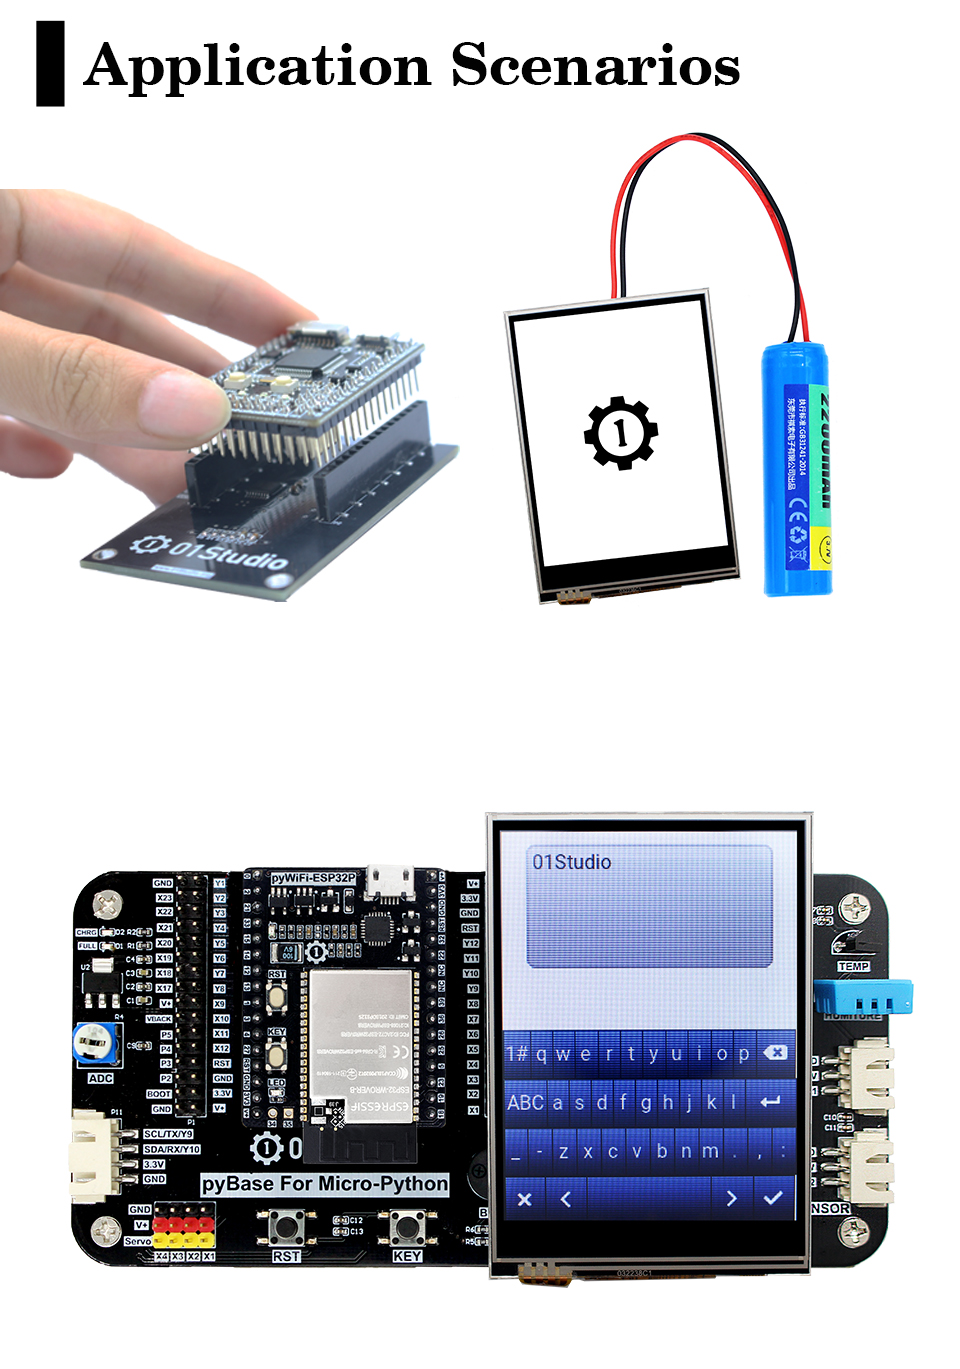 01-Studio-32-SPI-TFT-LCD-Resistive-Touch-Screen-Modul-PyBorad-Development-Micropython-Accessory-Litt-1784351-4